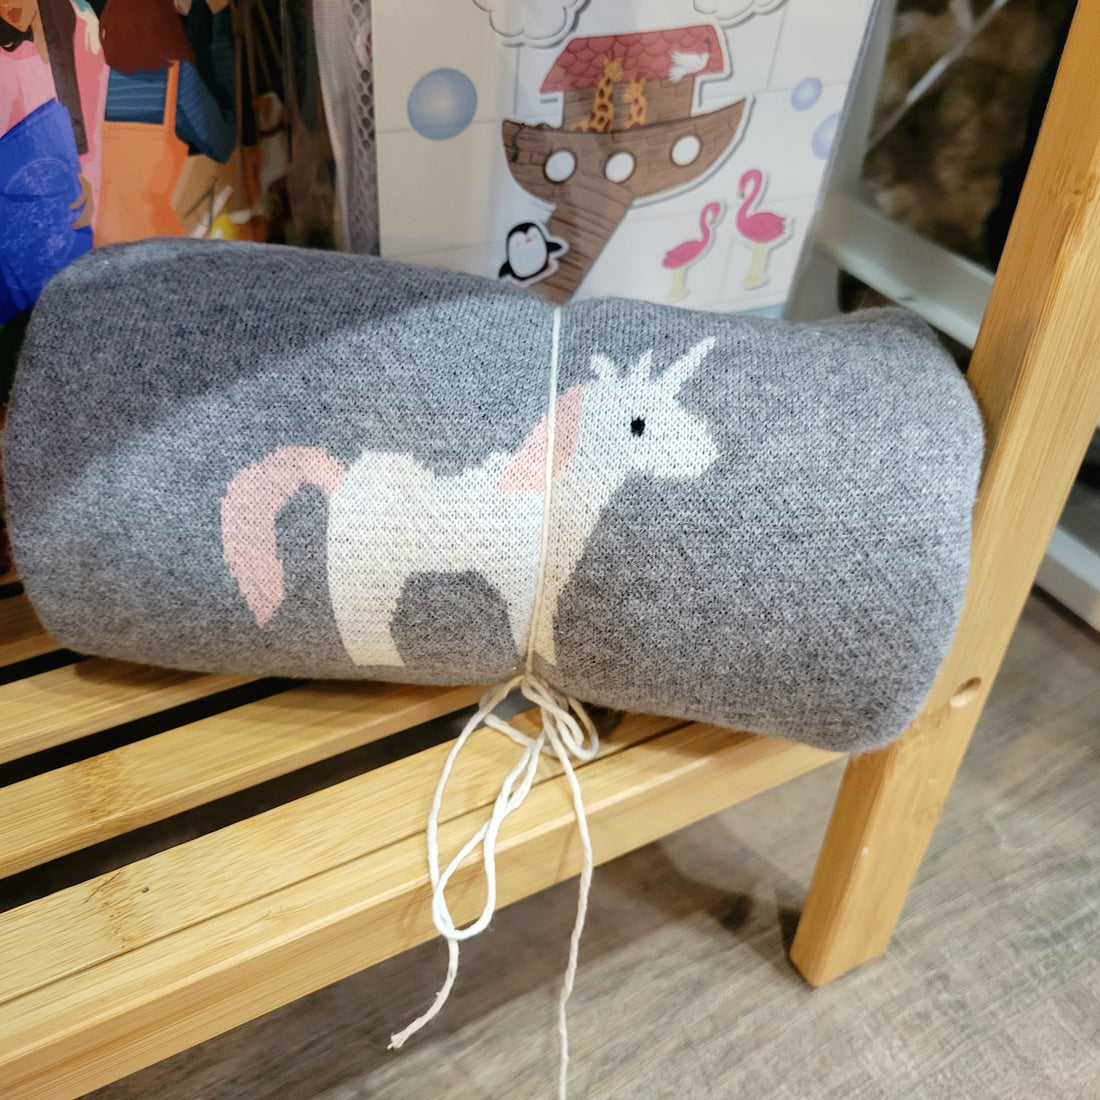 Knit Printed Baby Blanket - That's So Darling